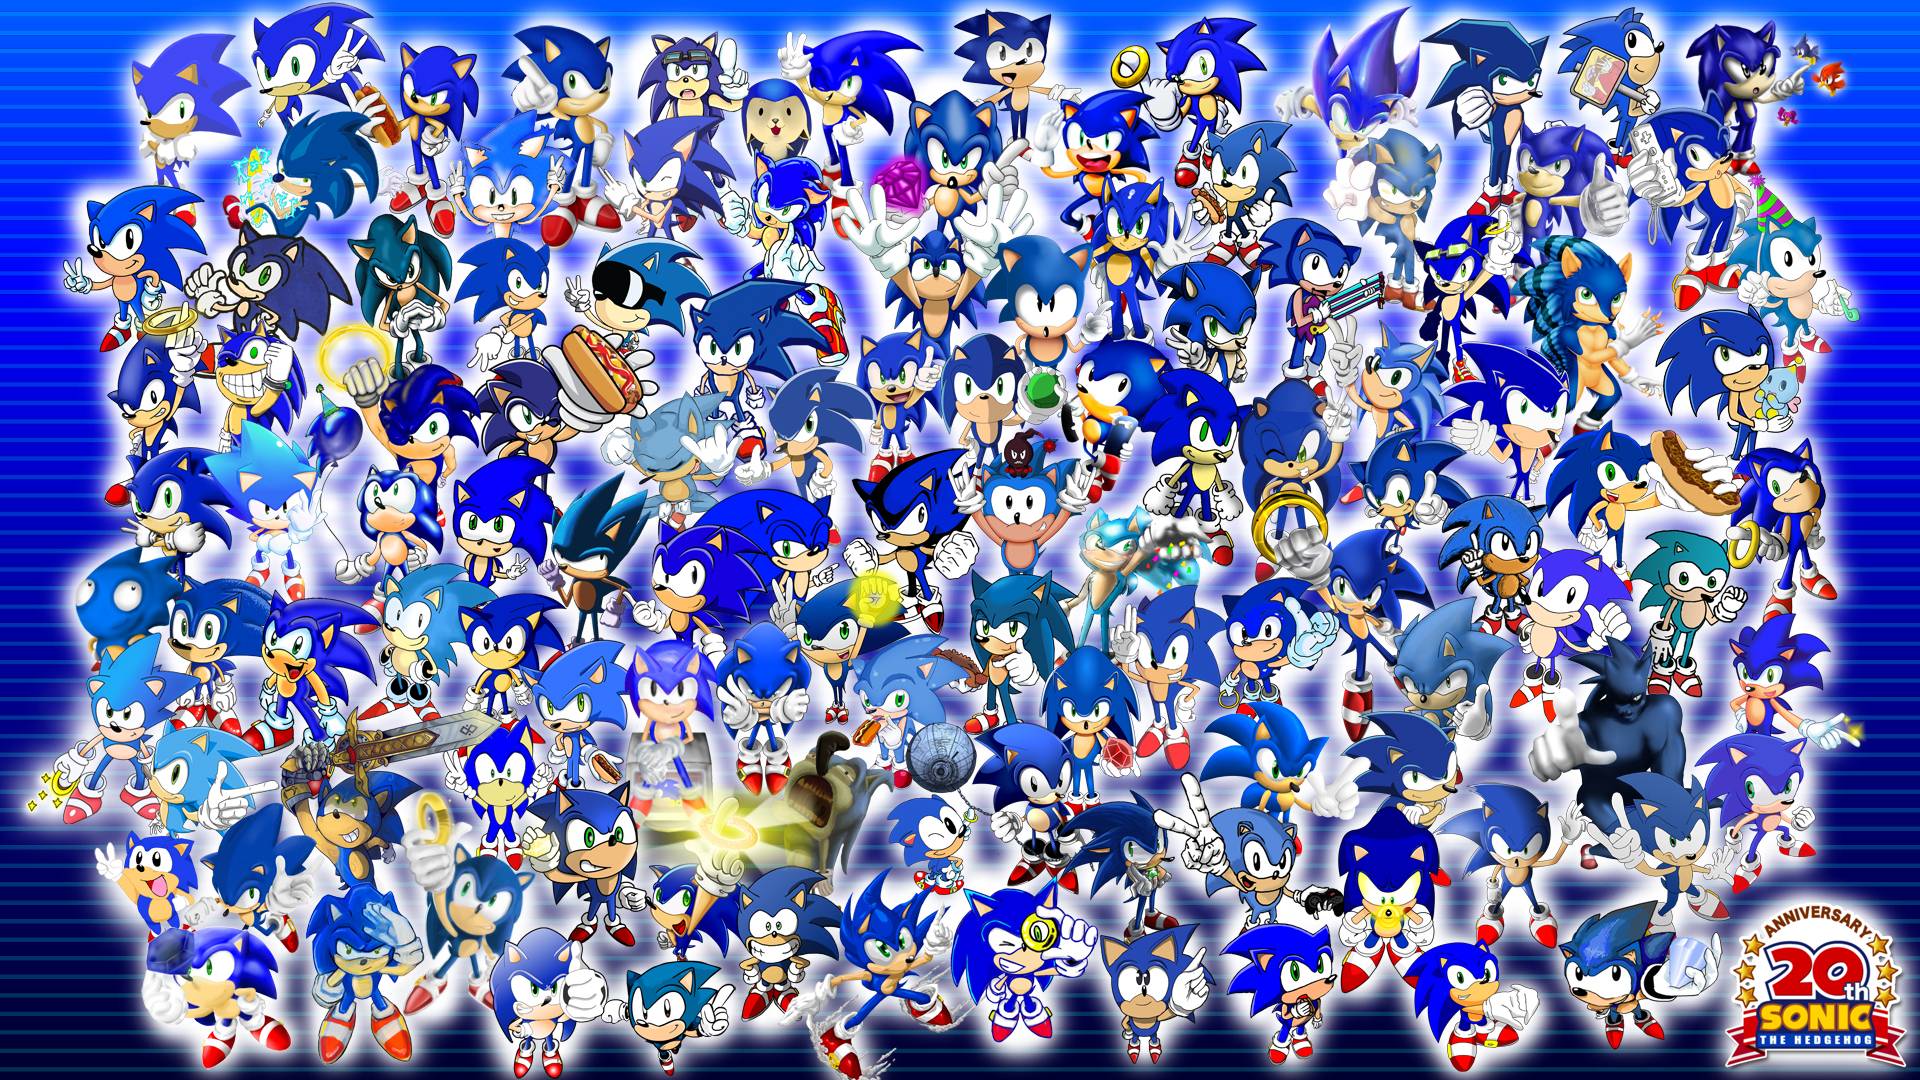 Project 20 Sonic Wallpaper the Hedgehog Wallpaper